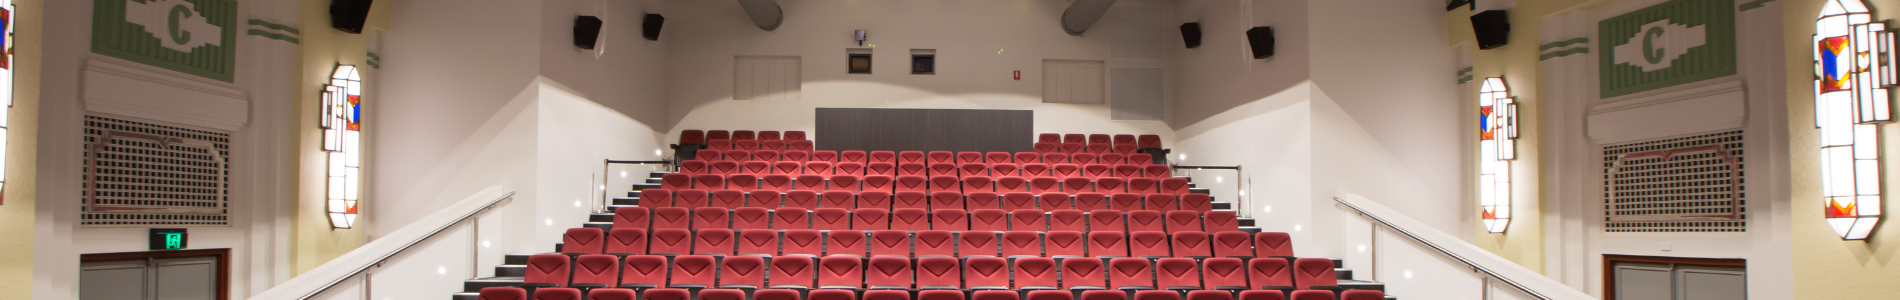 banner image of inside goondiwindi cinema main theatre red seats